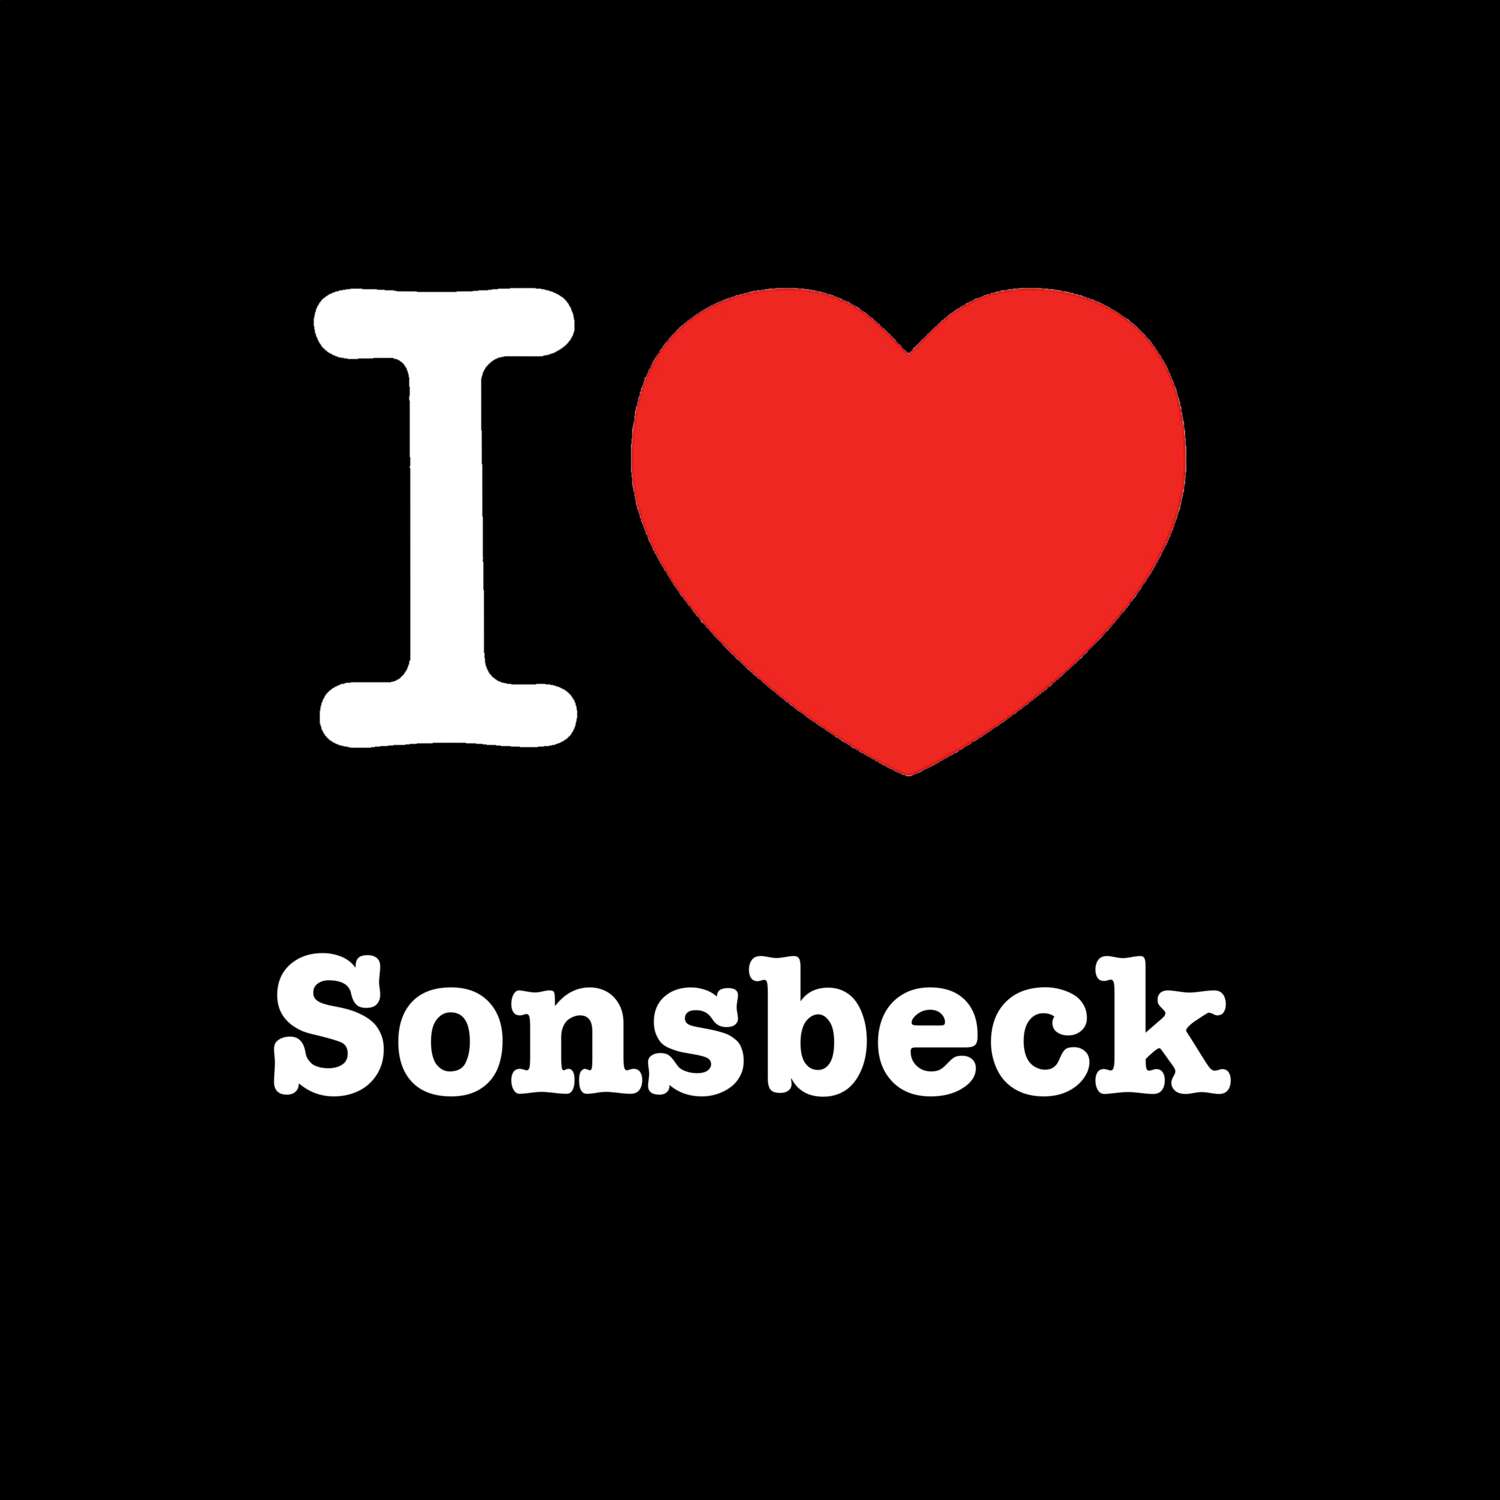 Sonsbeck T-Shirt »I love«